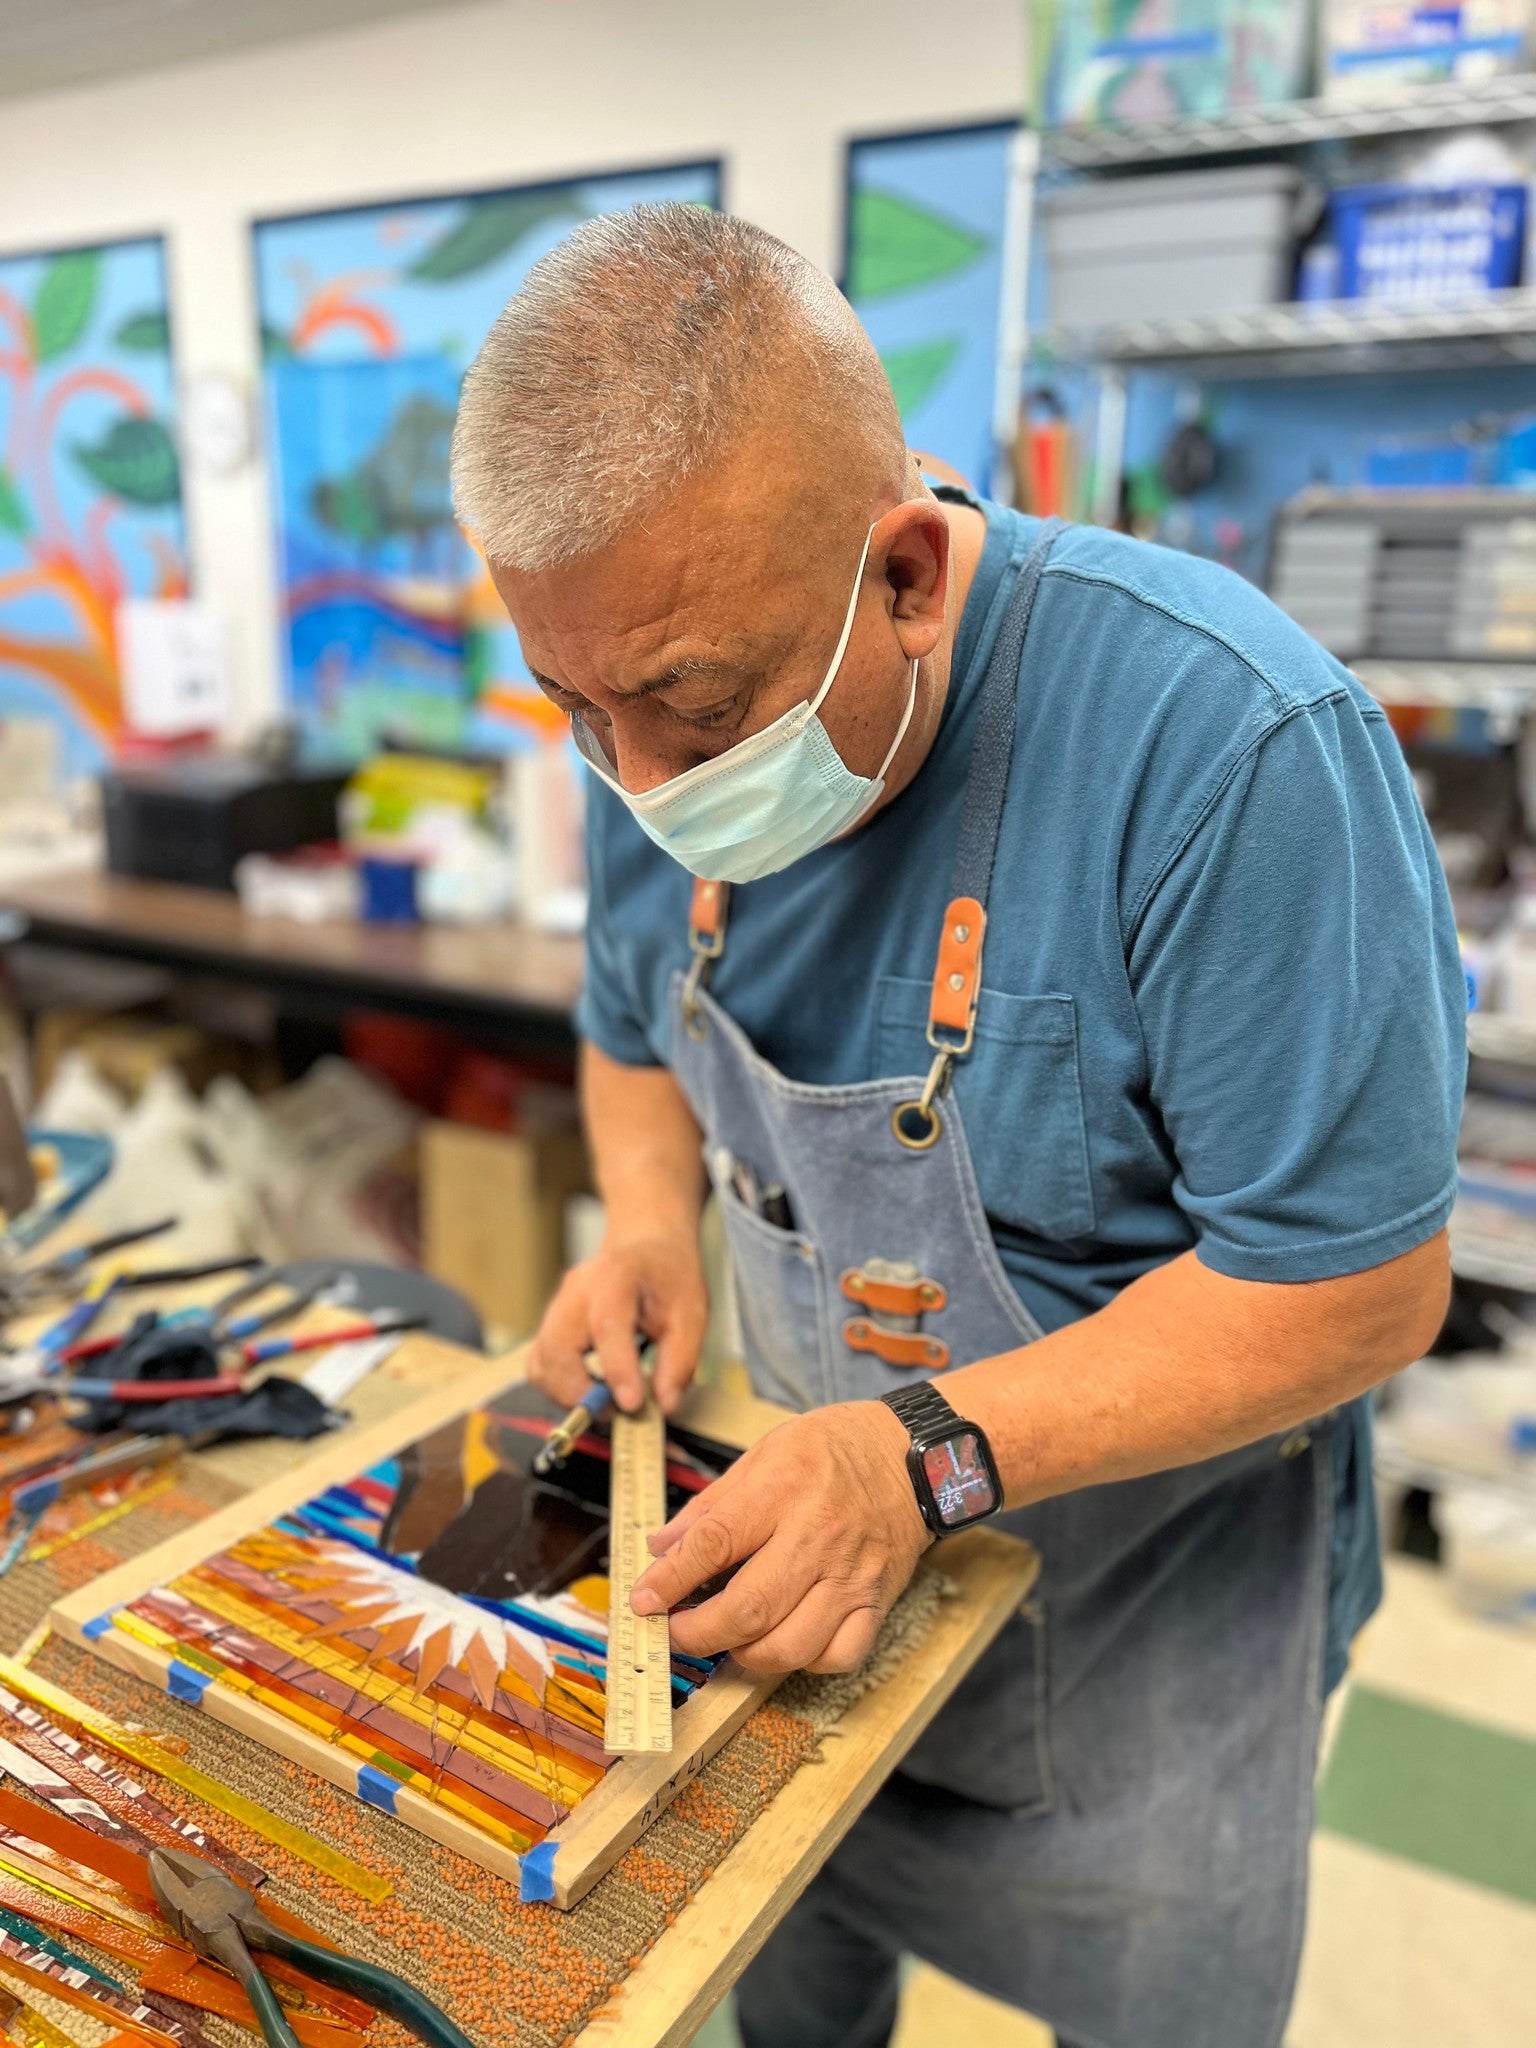 Artist Jose working on Teller Commission